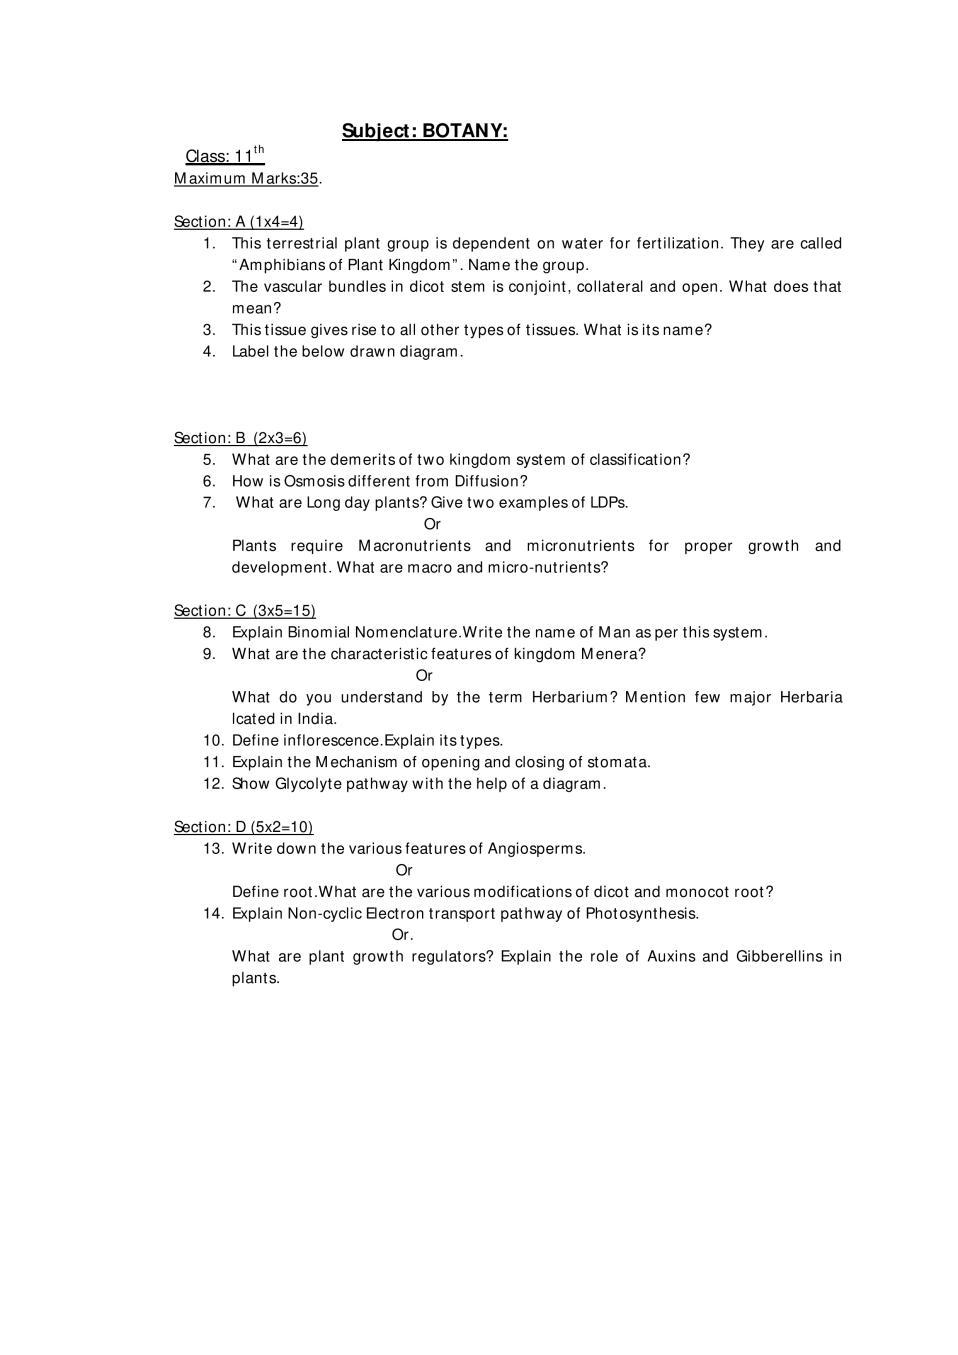 JKBOSE 11th Model Paper Botany - Page 1